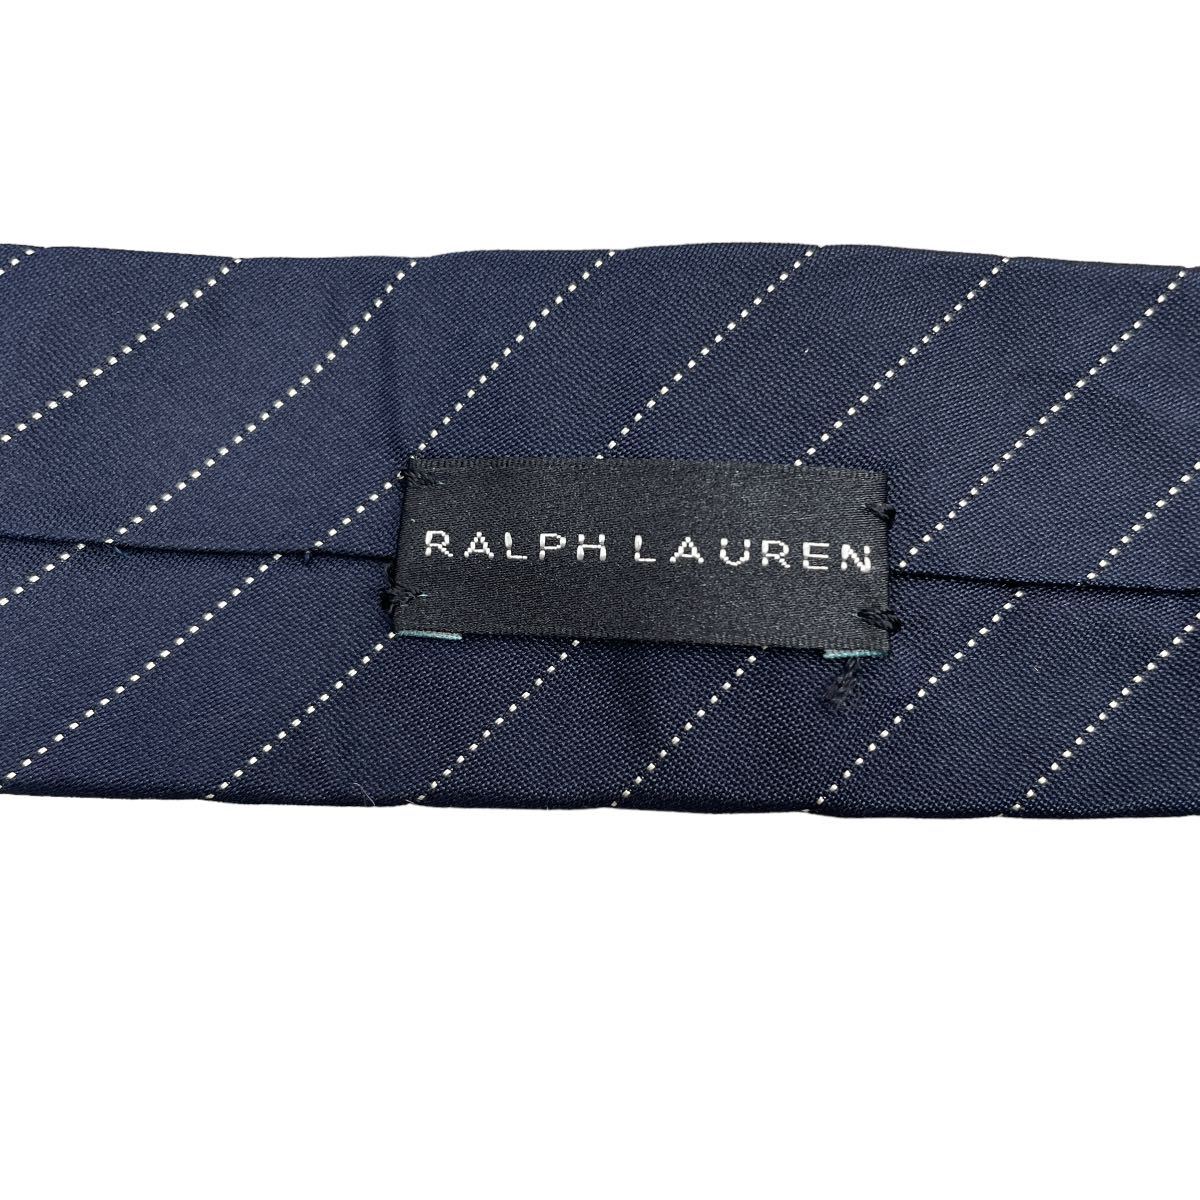 Ralph Lauren Black Label / Ralph Lauren Black Label полоса галстук темно-синий Италия производства шелк 